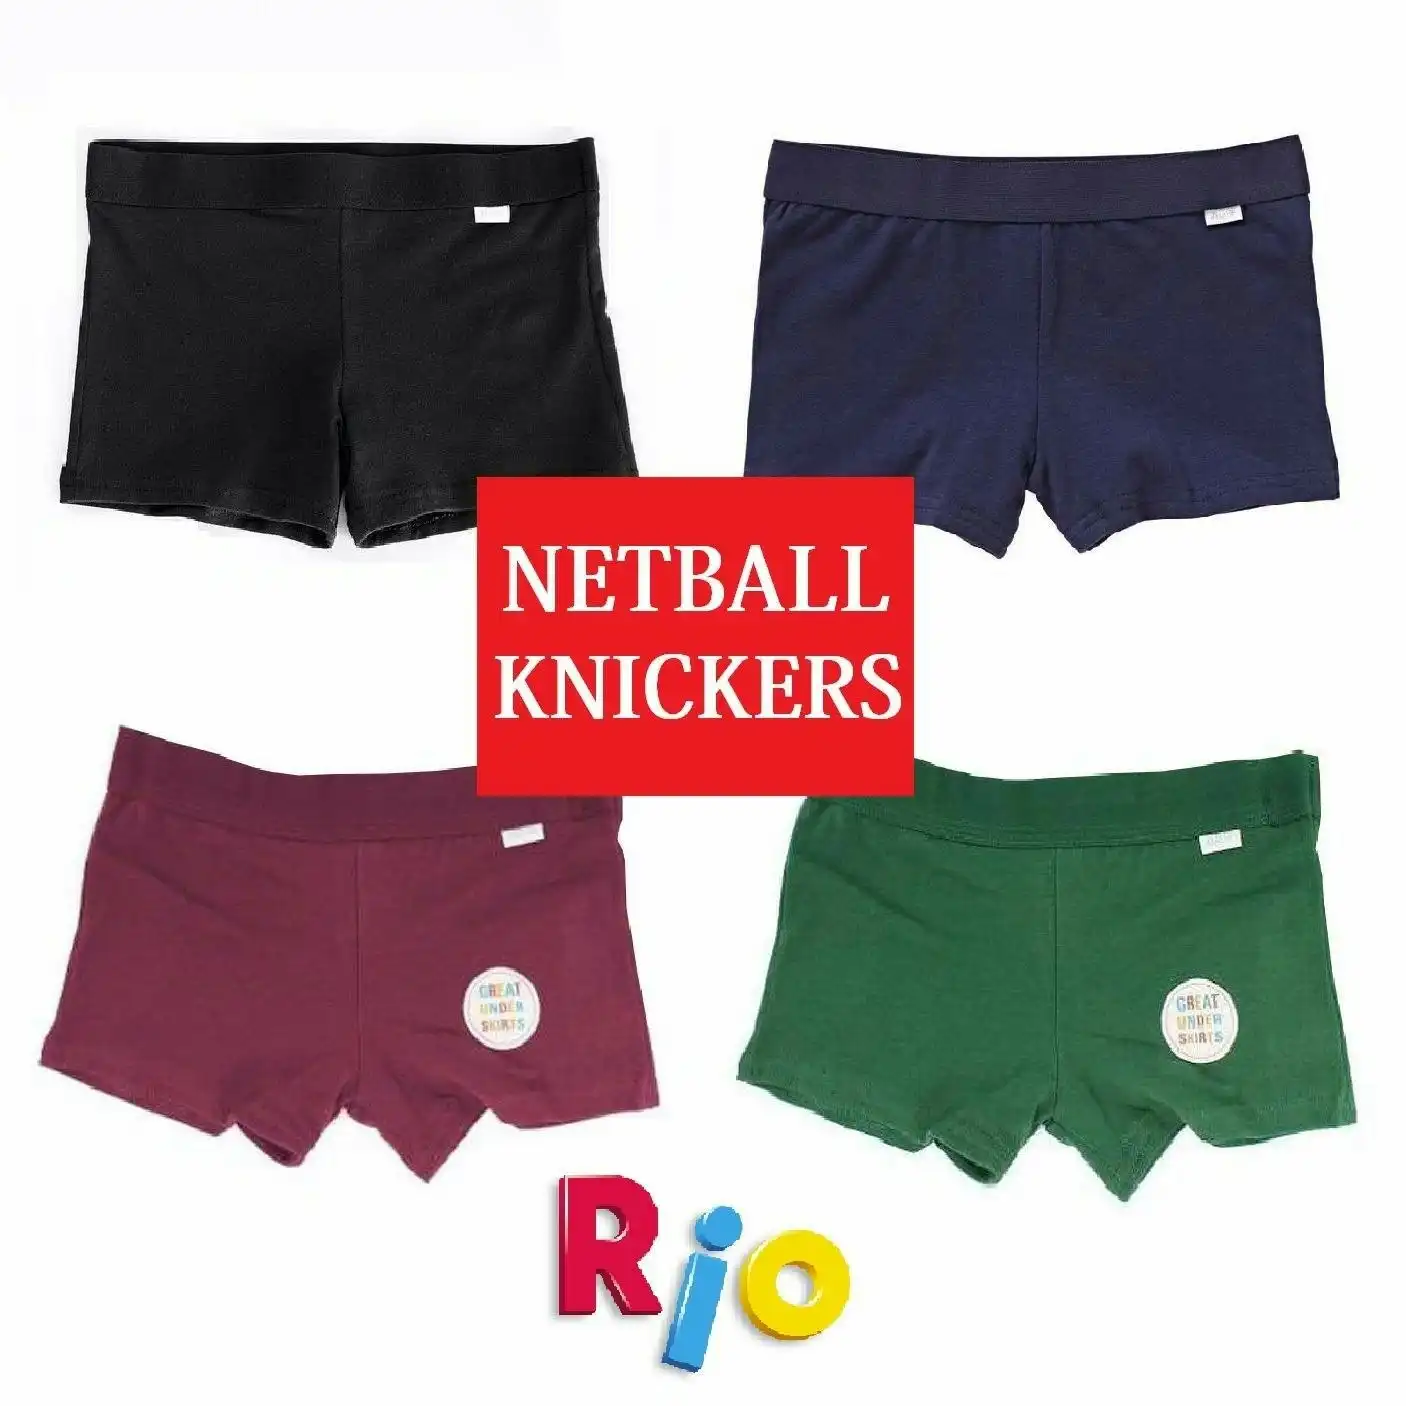 Girls Rio Netball Knickers Black Navy Green Shorts Underwear Kids School Sports